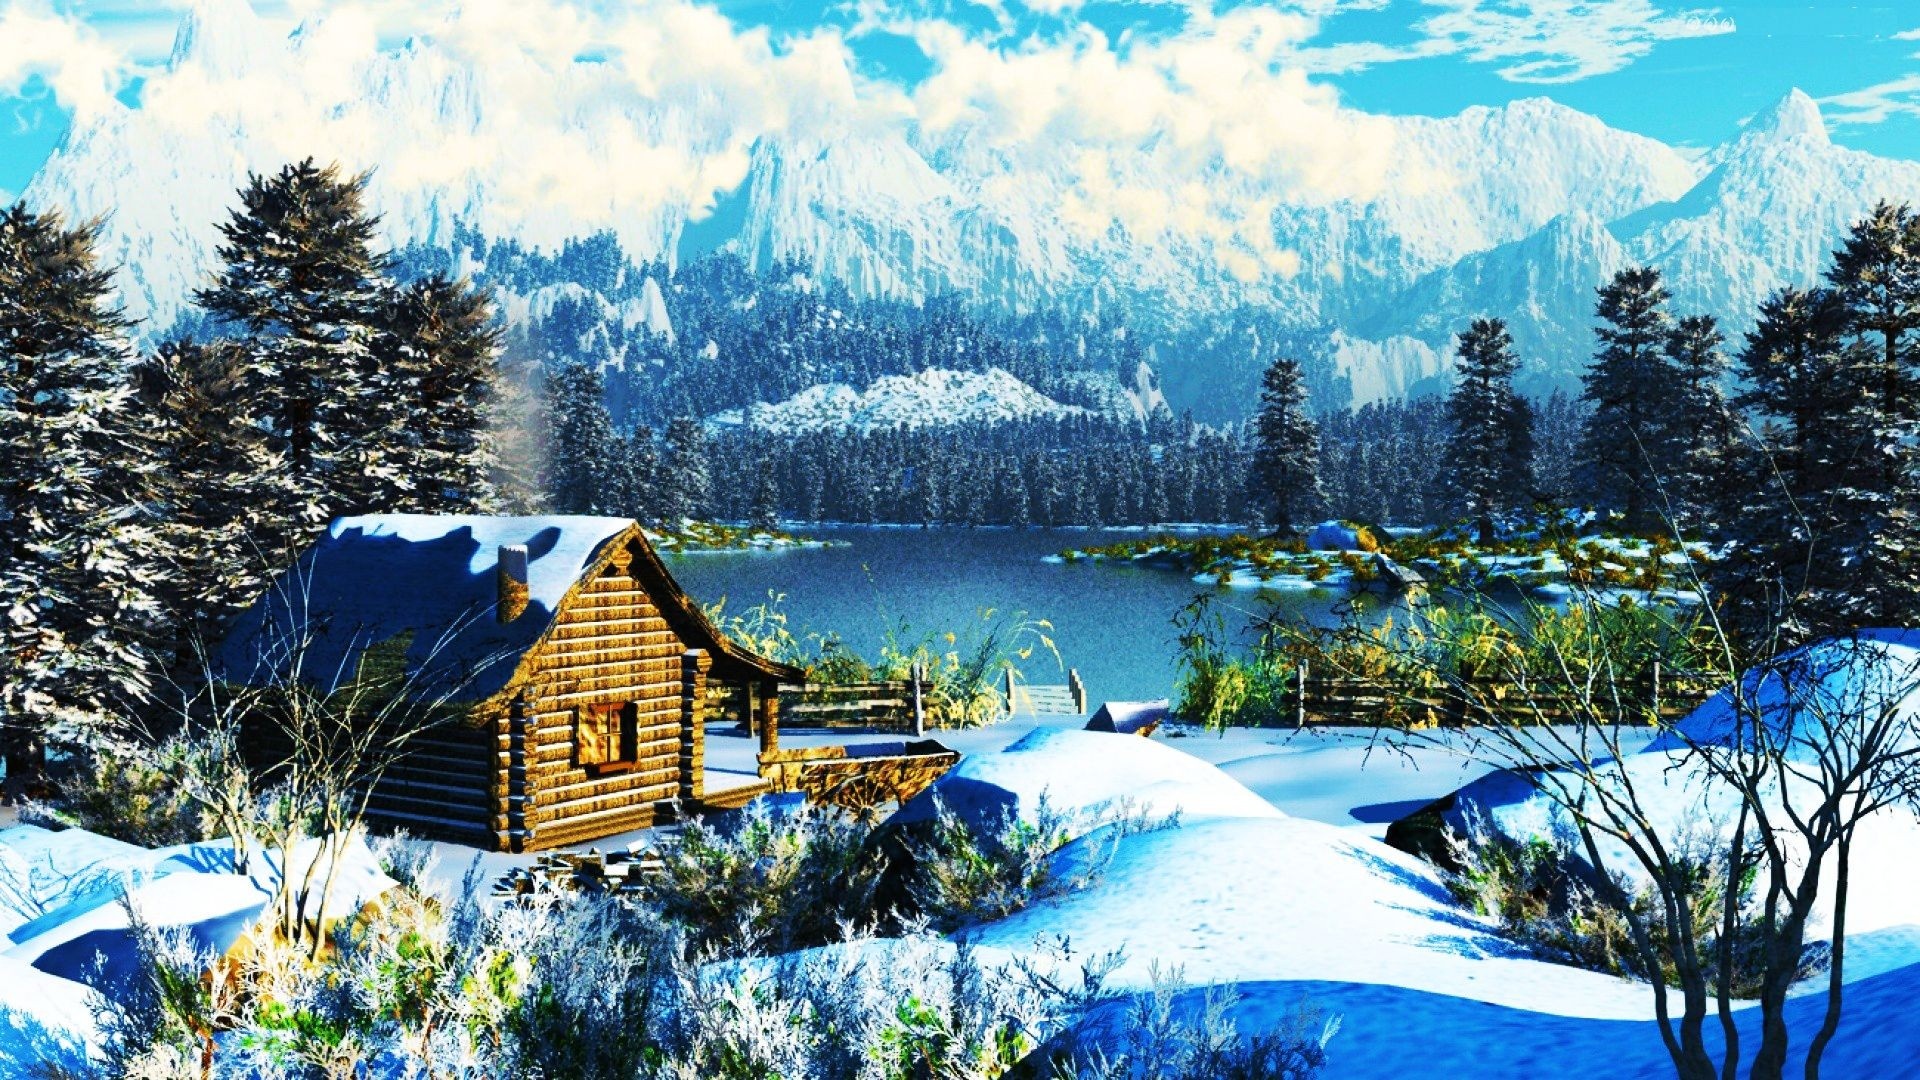 Log Cabin, Winter retreat, Snowy wonderland, Cozy haven, Chalet getaway, 1920x1080 Full HD Desktop